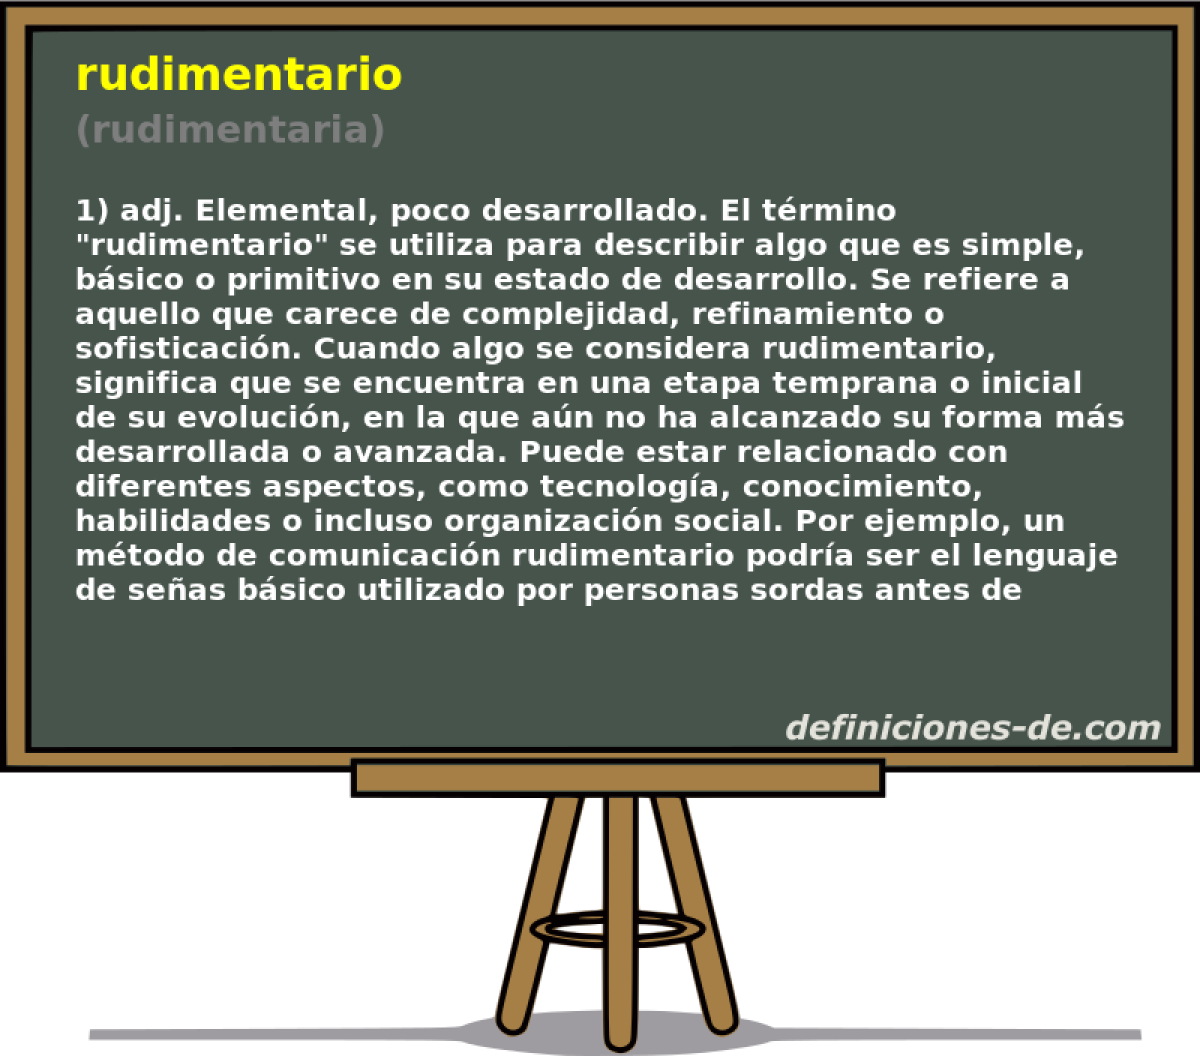 rudimentario (rudimentaria)